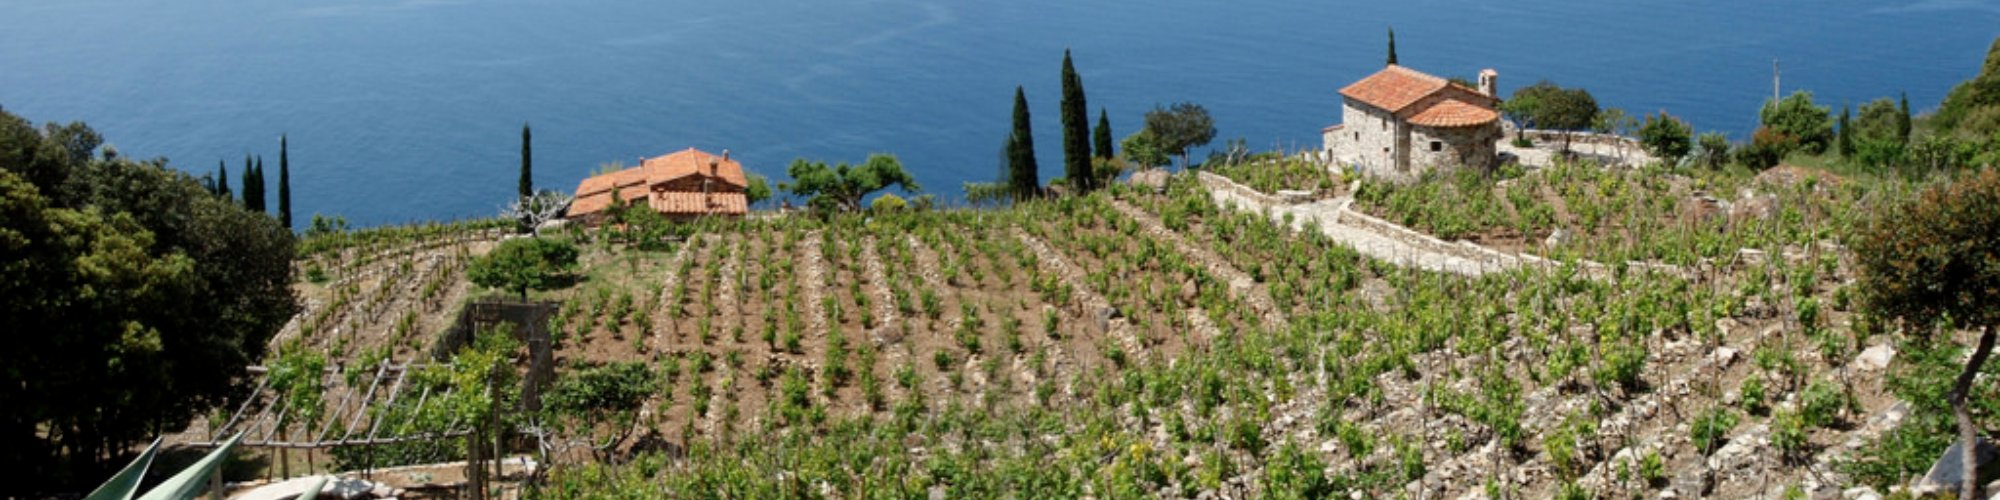 Elba vineyard